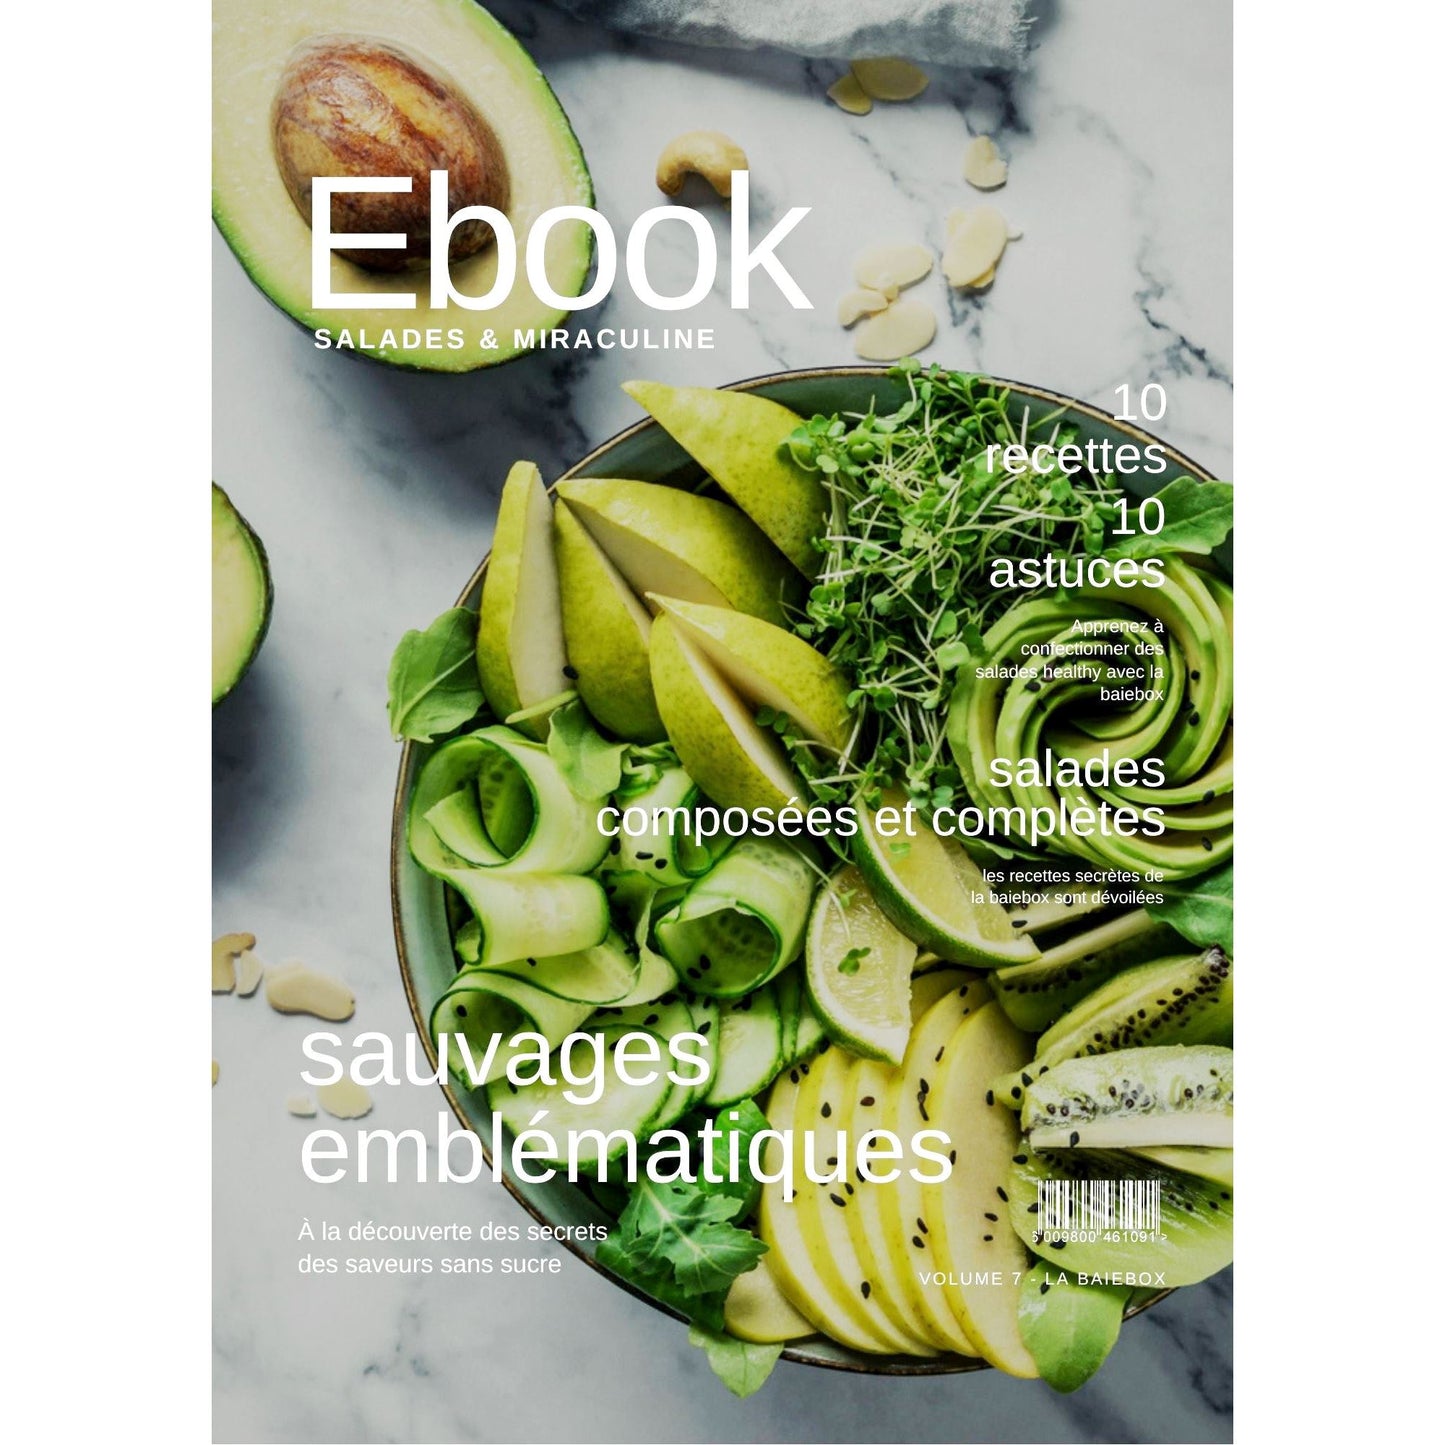 E-BOOK HEALTHY - STOP SUCRE Ebook LABAIEBOX - STOP SUCRE 